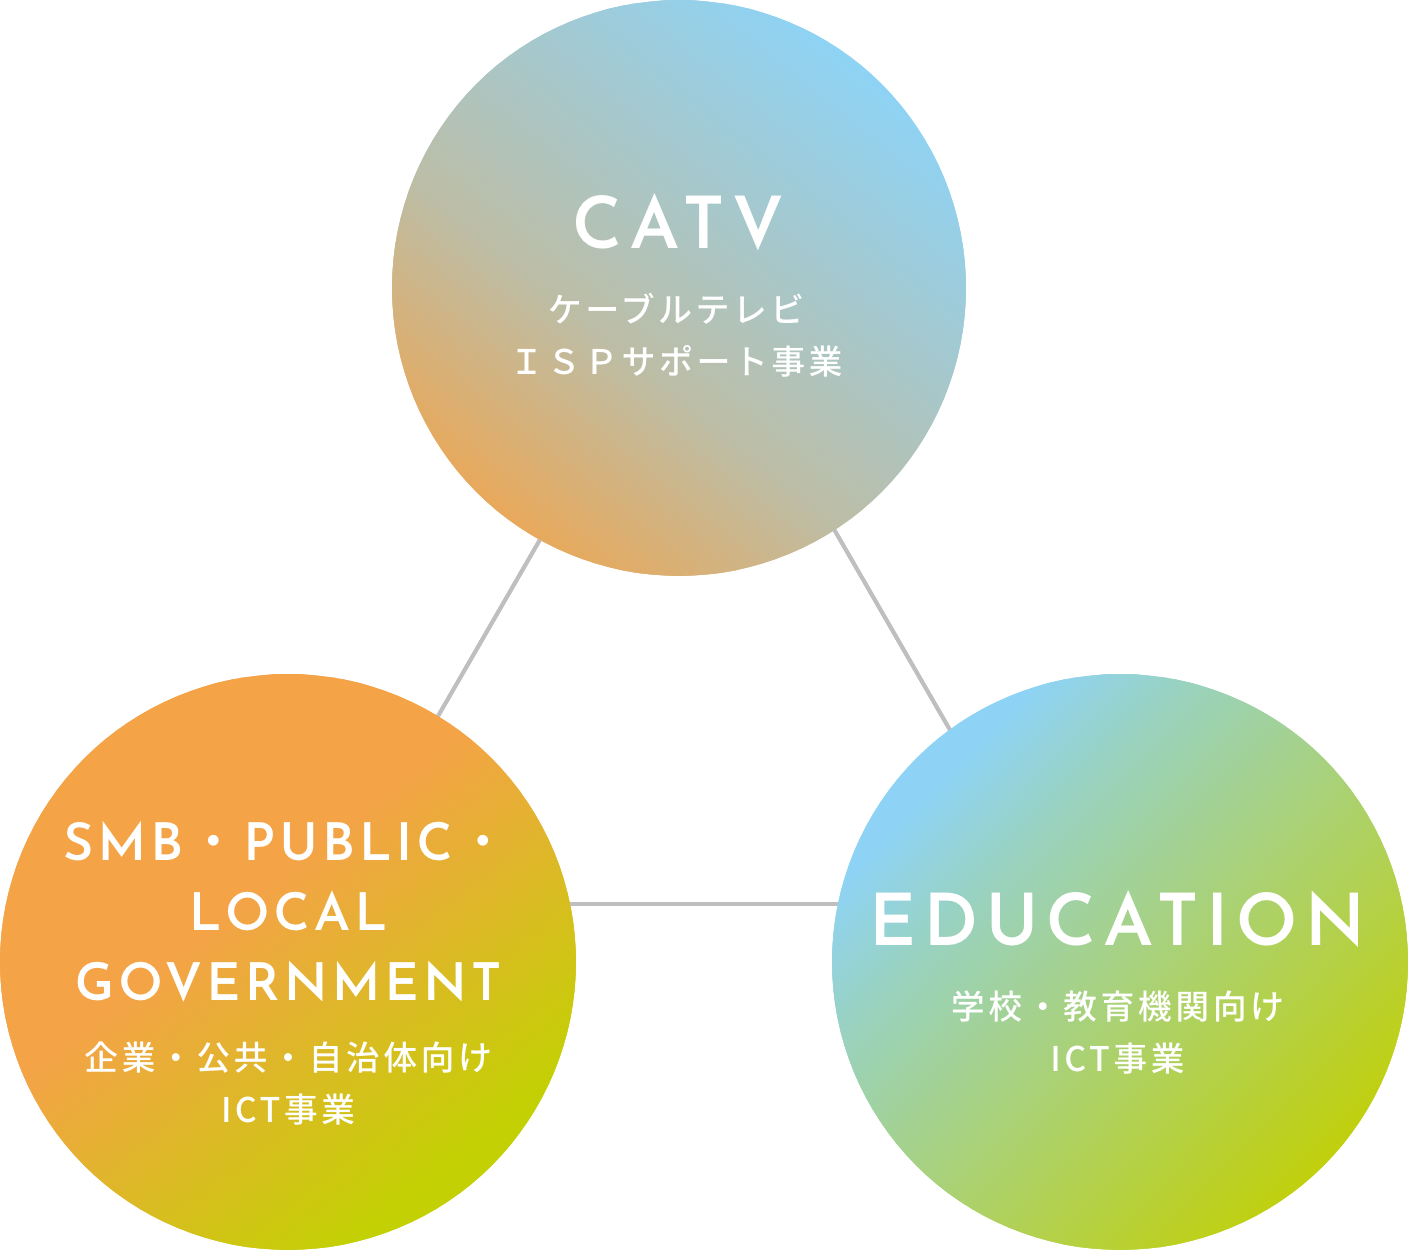 CATV ケーブルテレビ ISPサポート事業　SMB・PUBLIC・LOCAL GOVERNMENT 企業・公共・自治体向けICT事業　EDUCATION 学校・教育機関向けICT事業